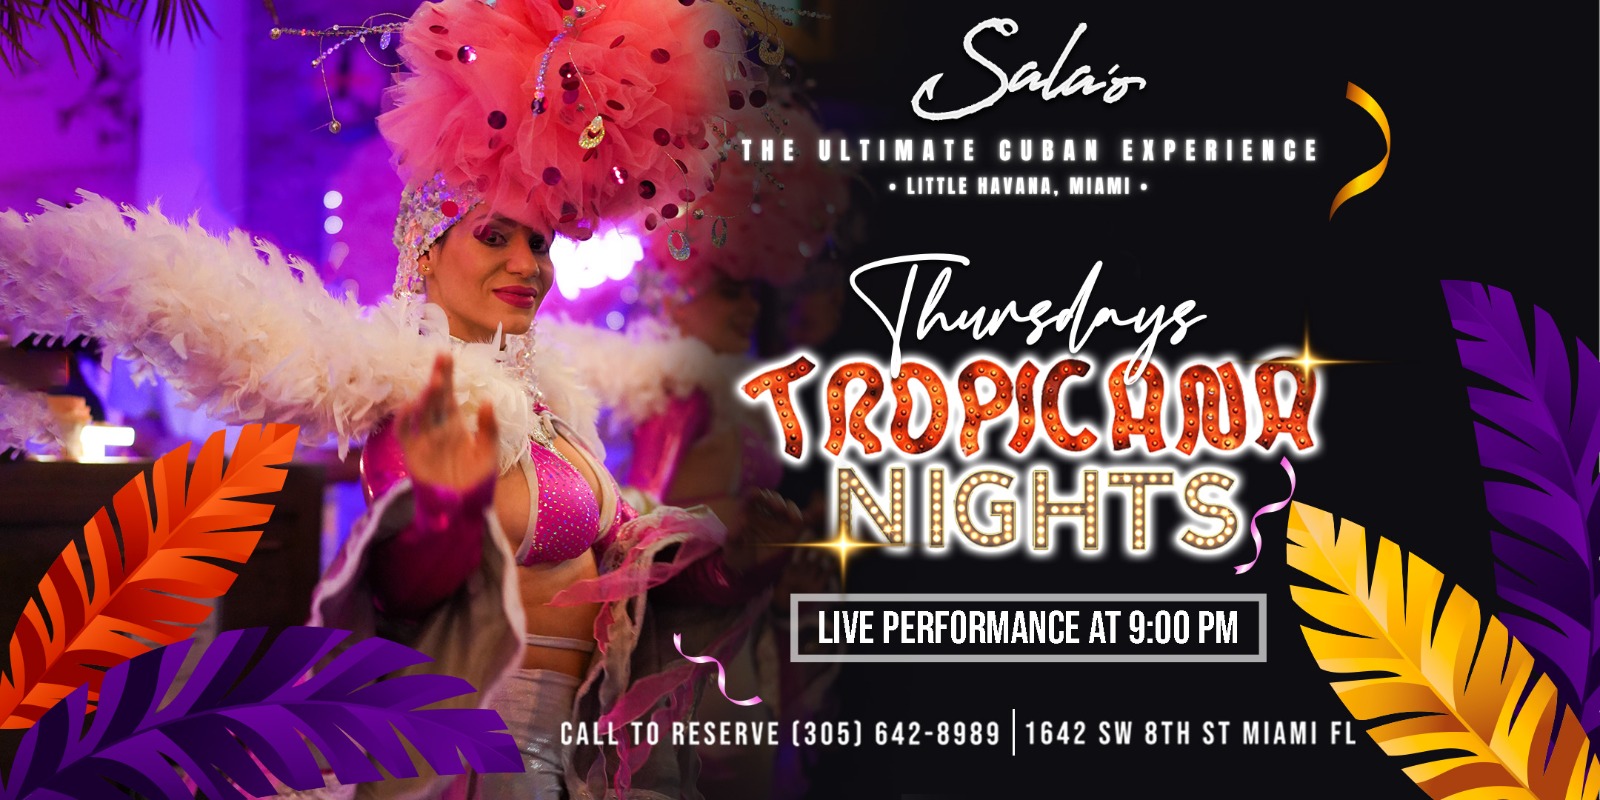 sala-o-cuban-restaurant-bar-tropicana-nights-every-thursday